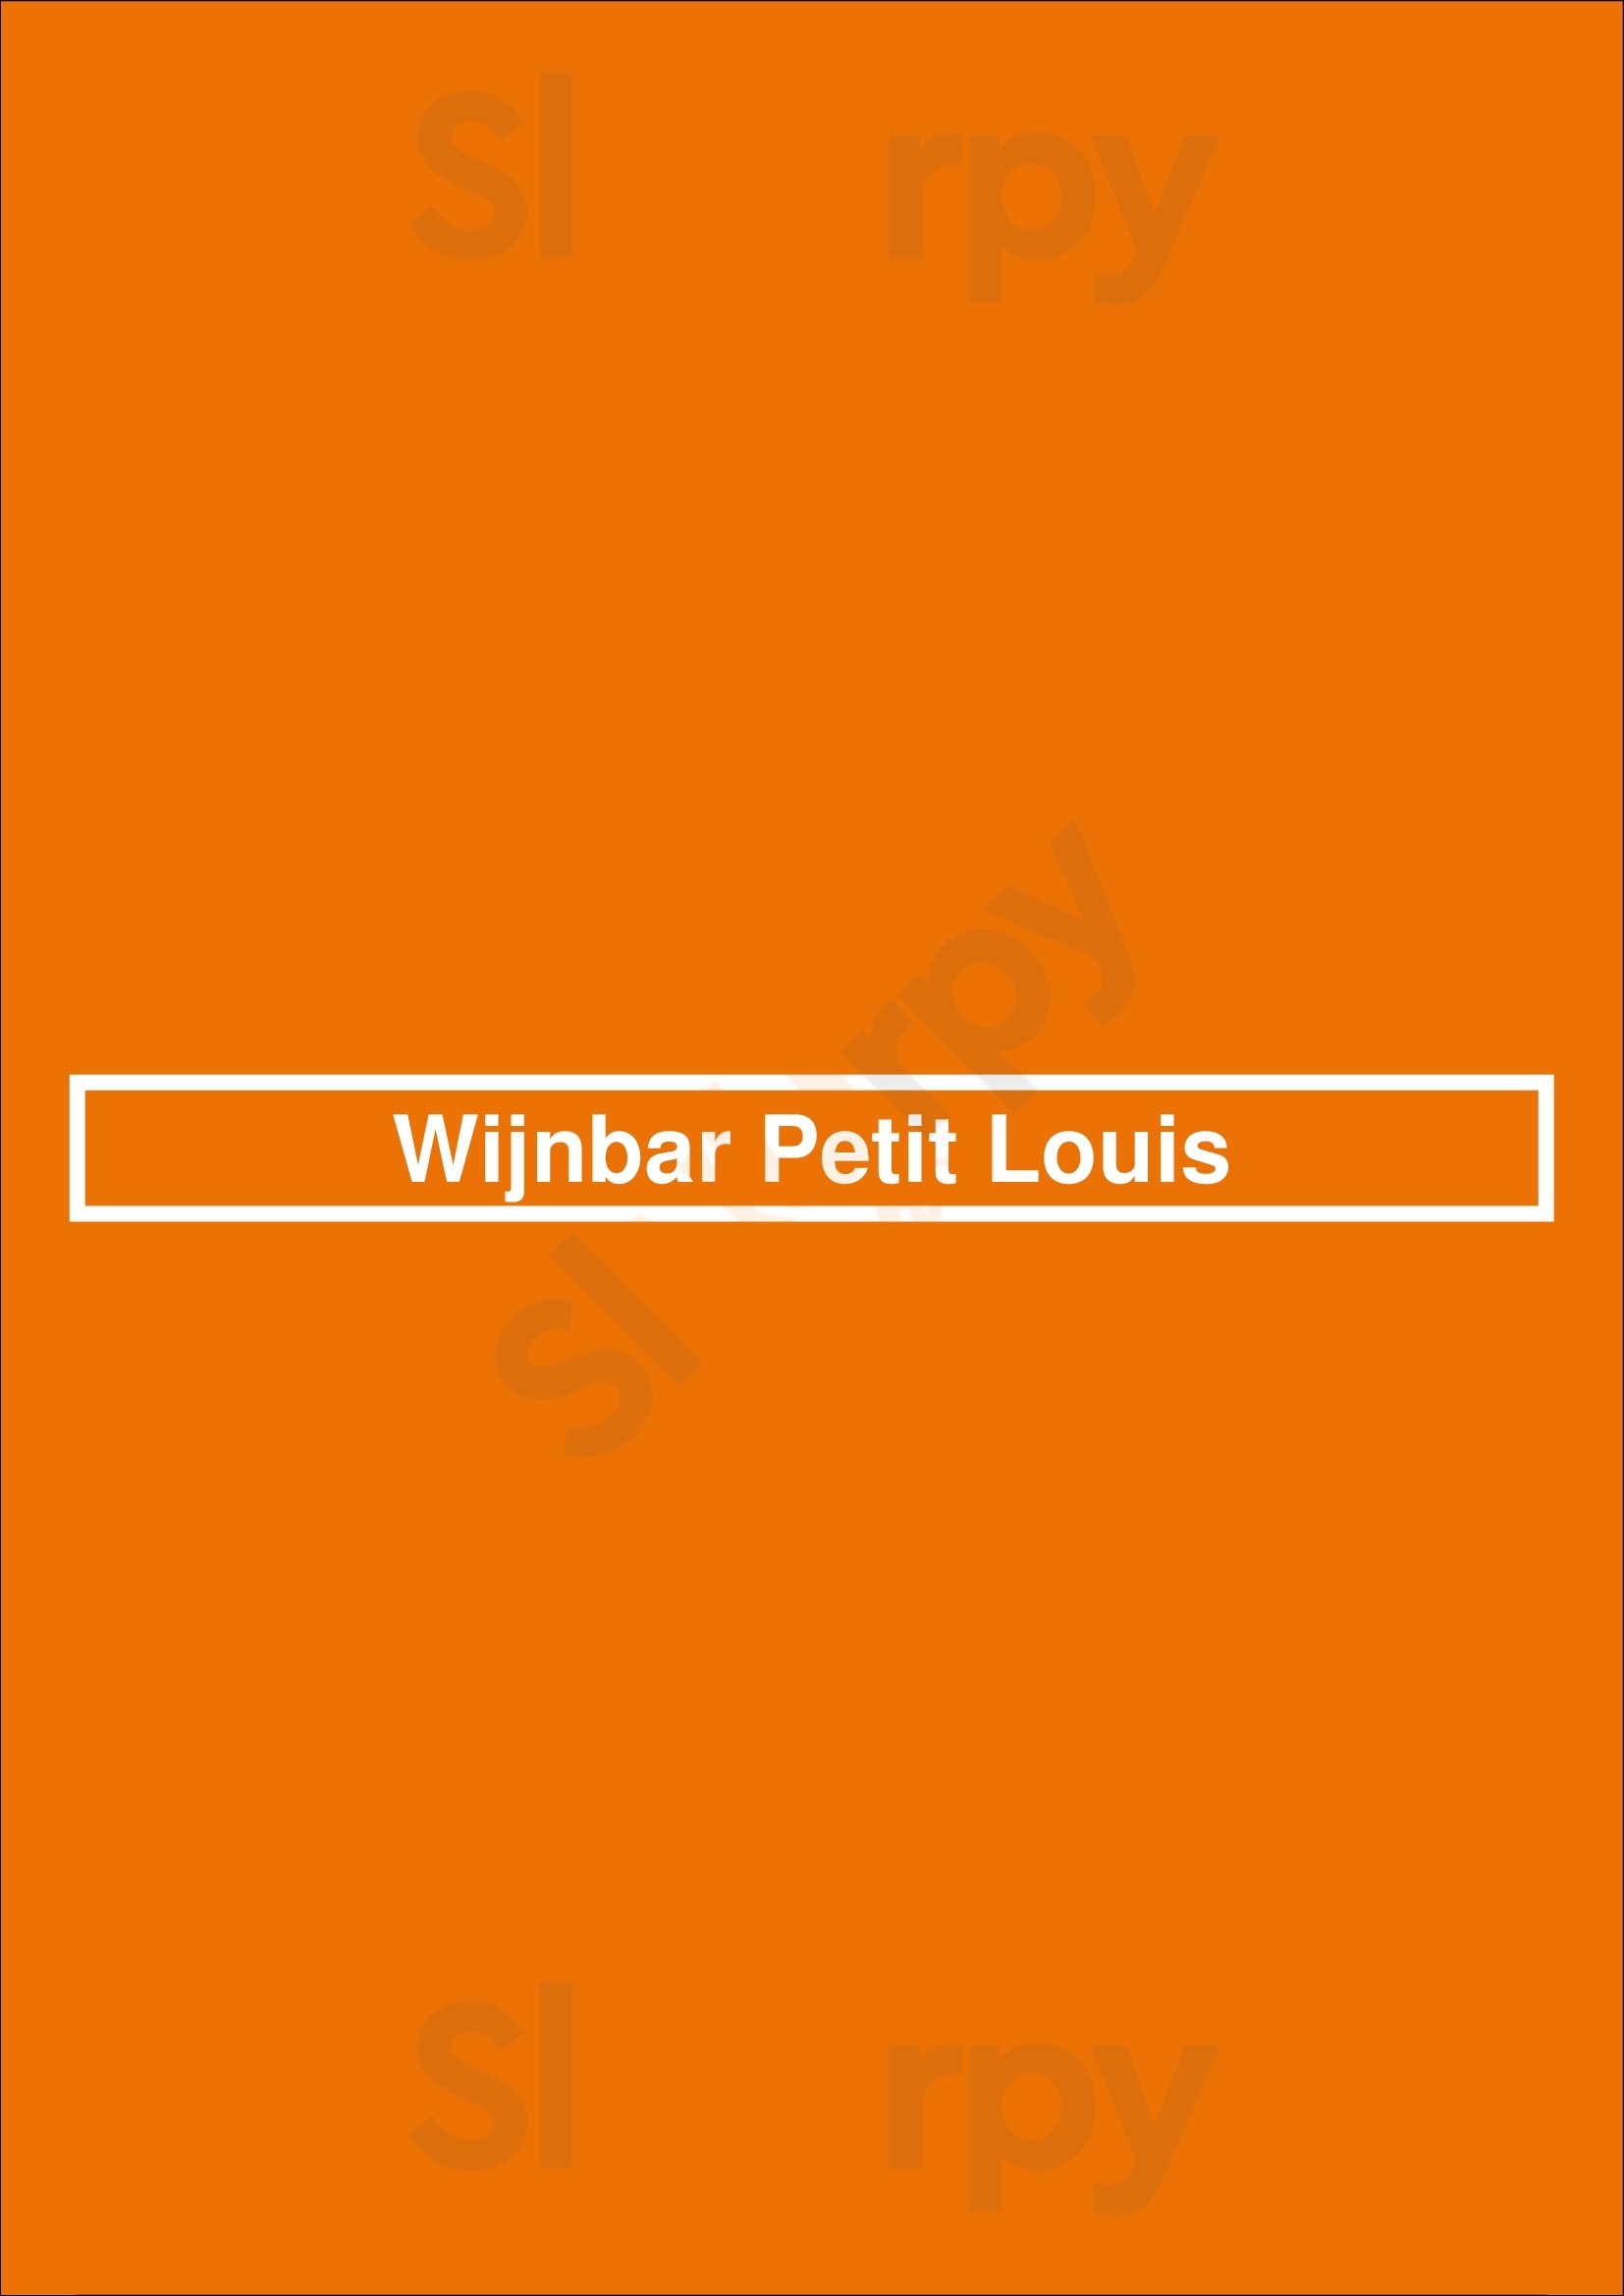 Wijnbar Petit Louis Wageningen Menu - 1